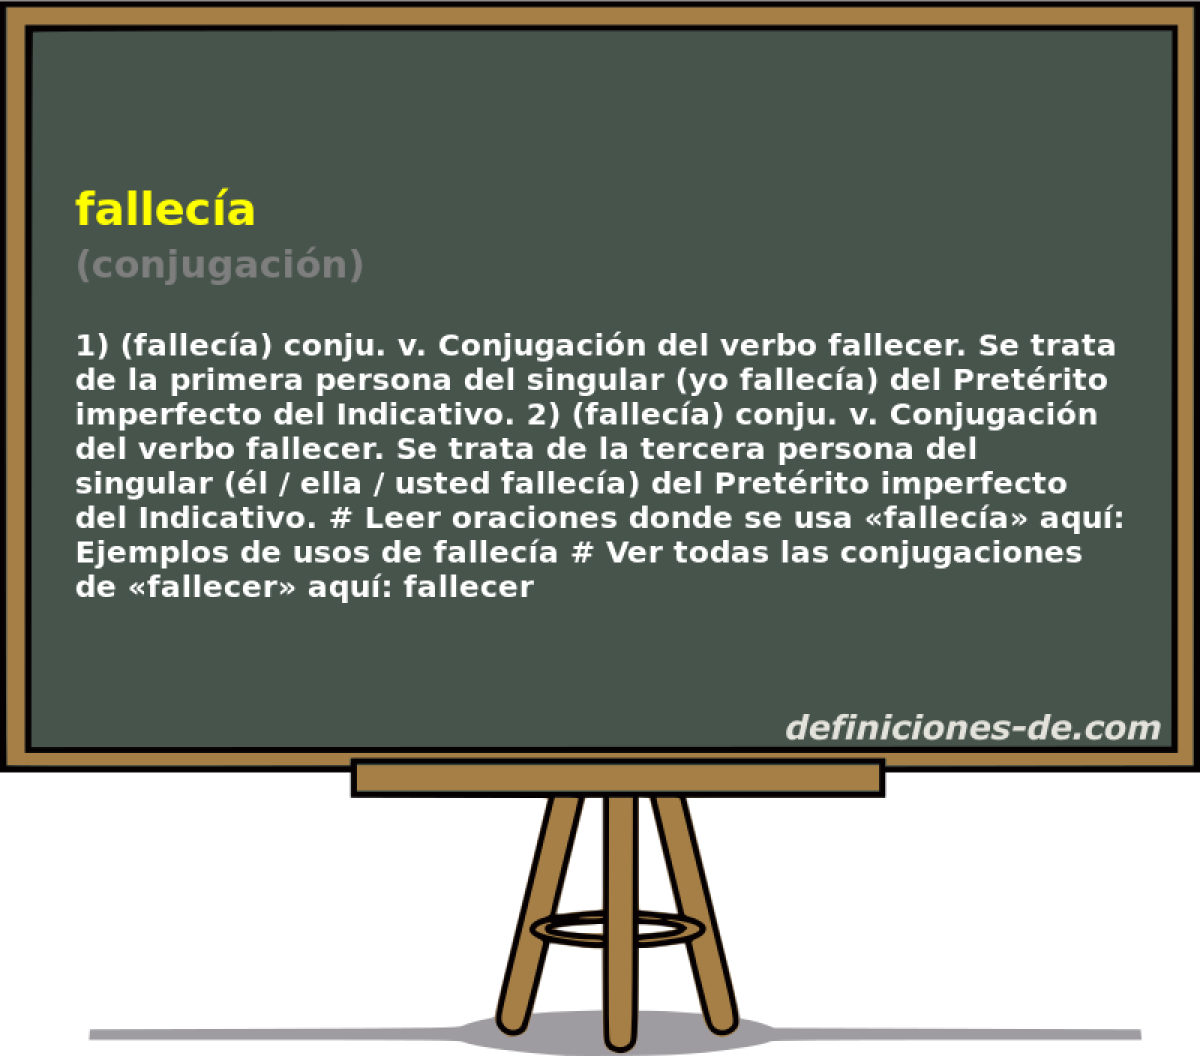 falleca (conjugacin)